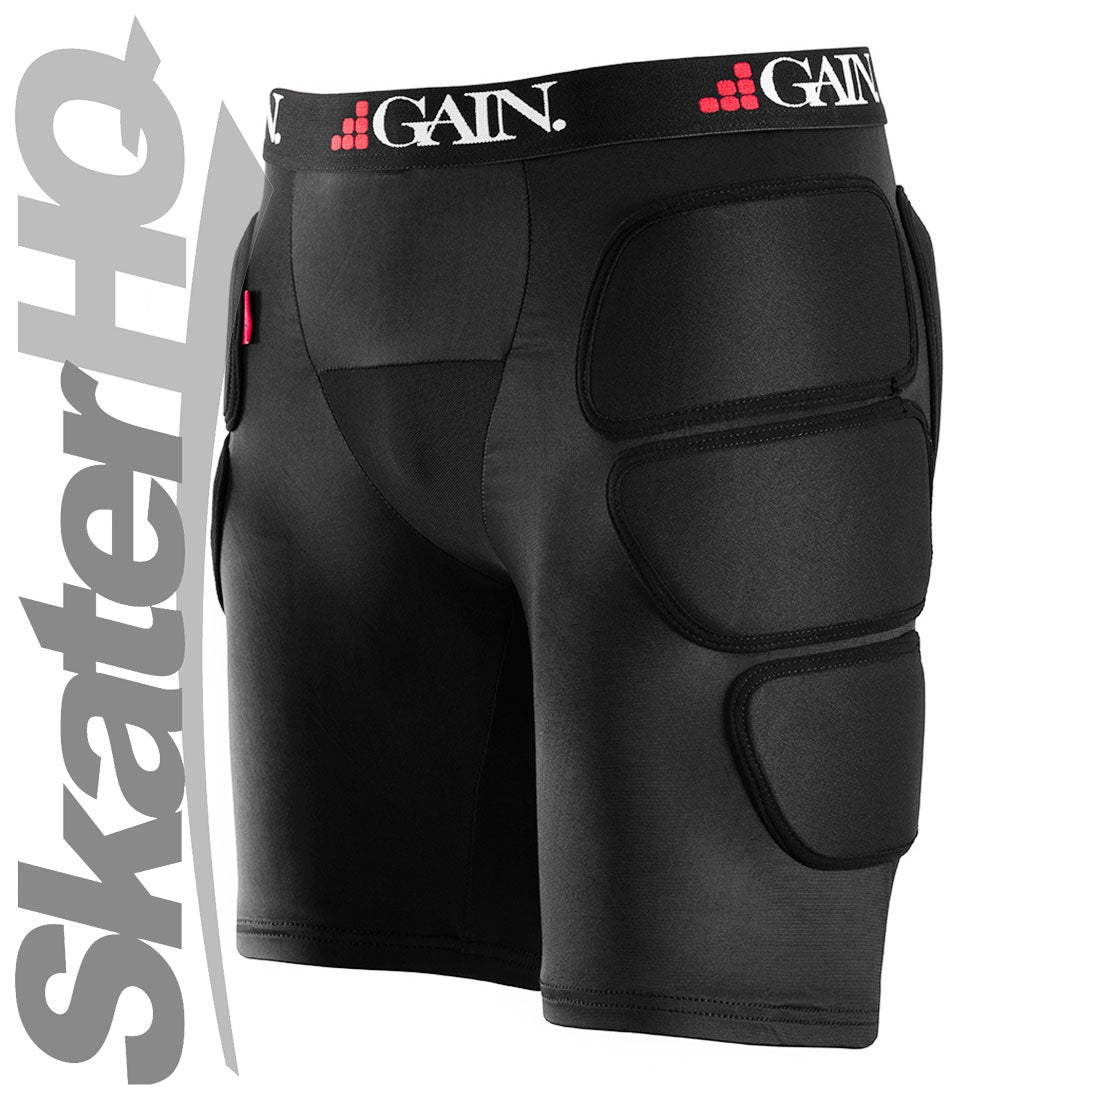 GAIN Sleeper Hip/Bum Pads - Black - M Protective Gear